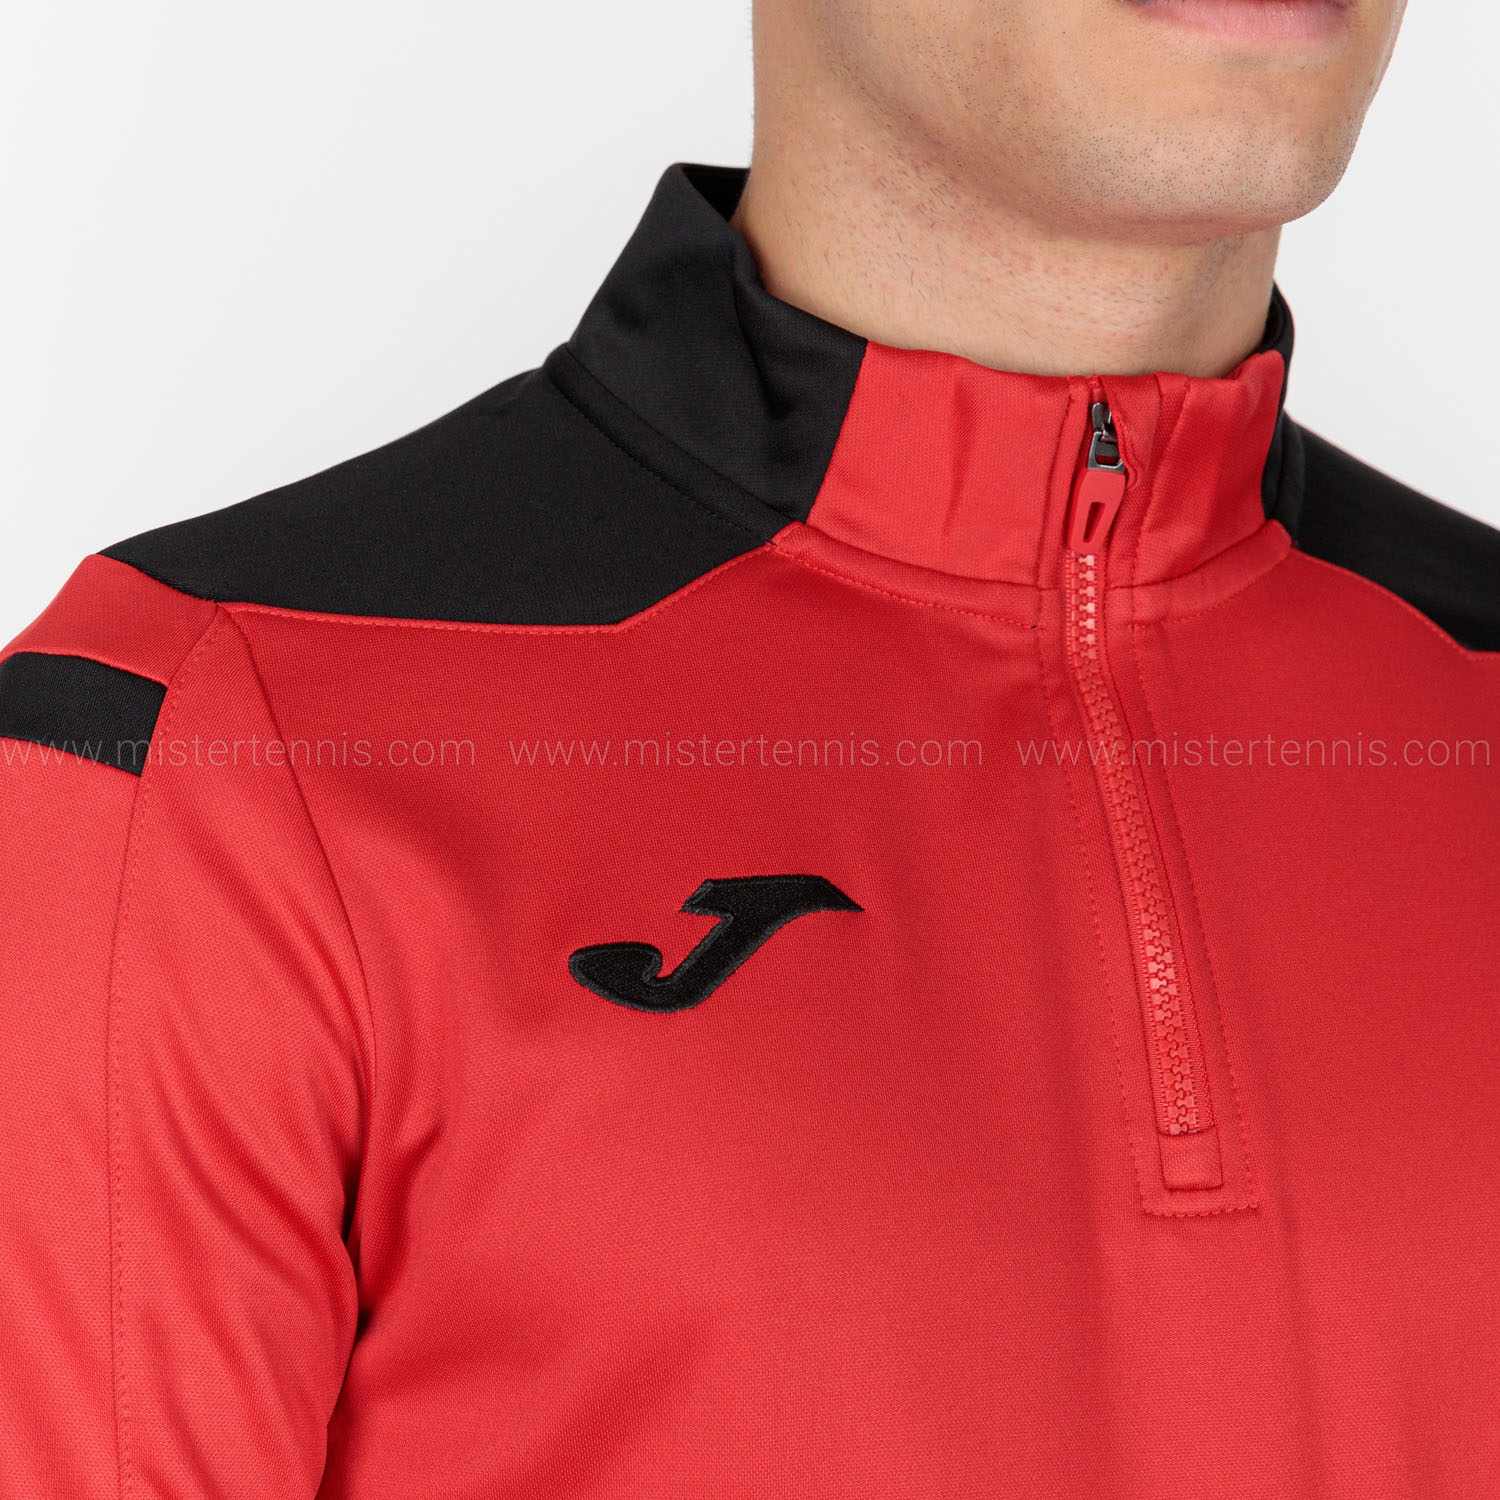 Joma Championship VI Shirt - Red/Black